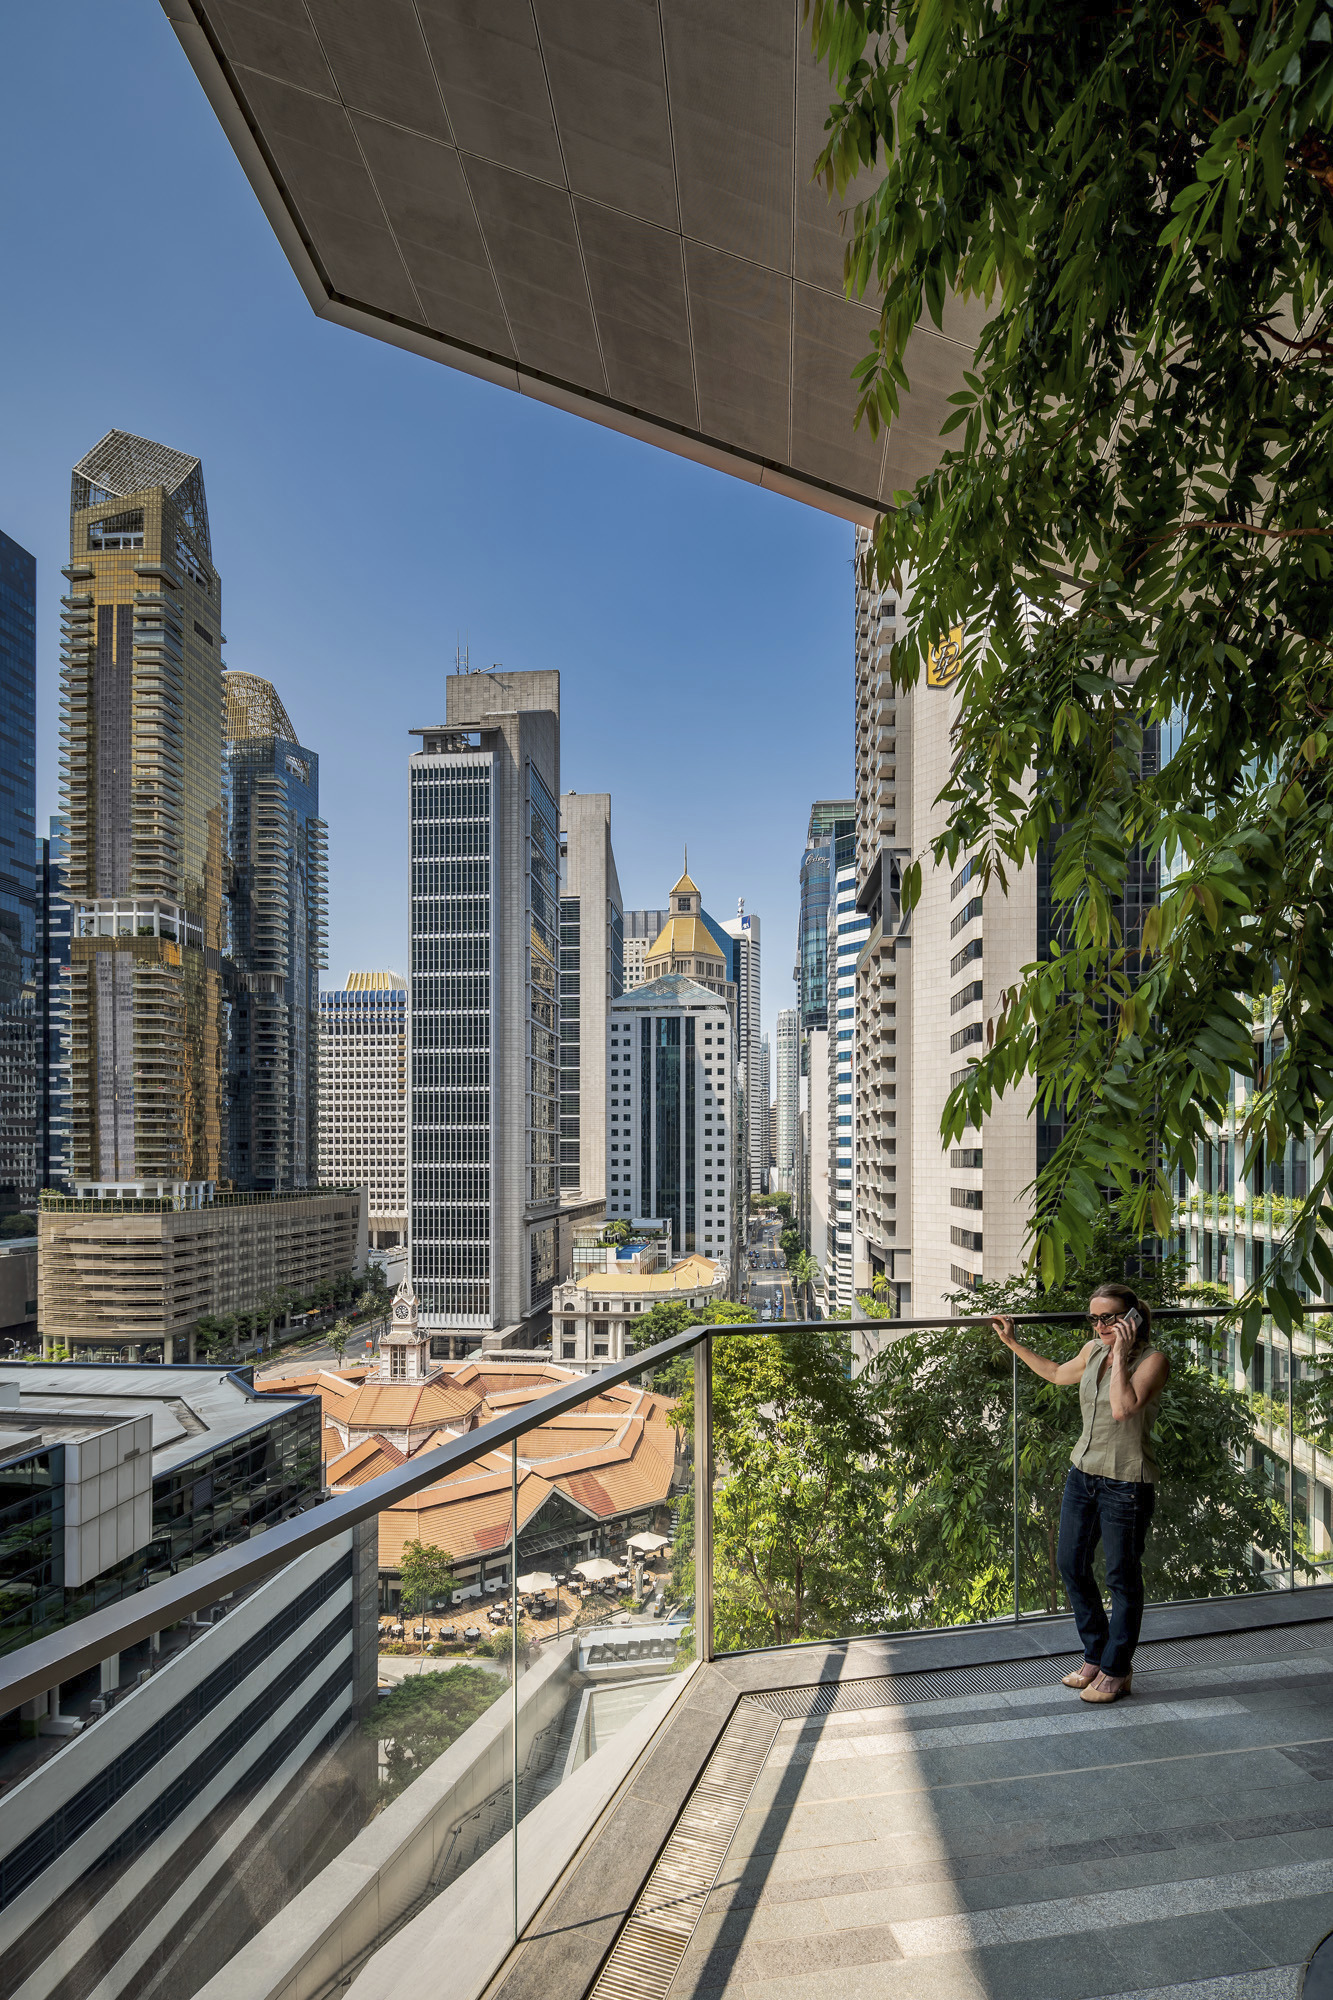 Sustainability Merit Award: 18 Robinson by Kohn Pedersen Fox Associates, architects61, and Grant Associates, in Singapore. Photo: Tim Griffith.